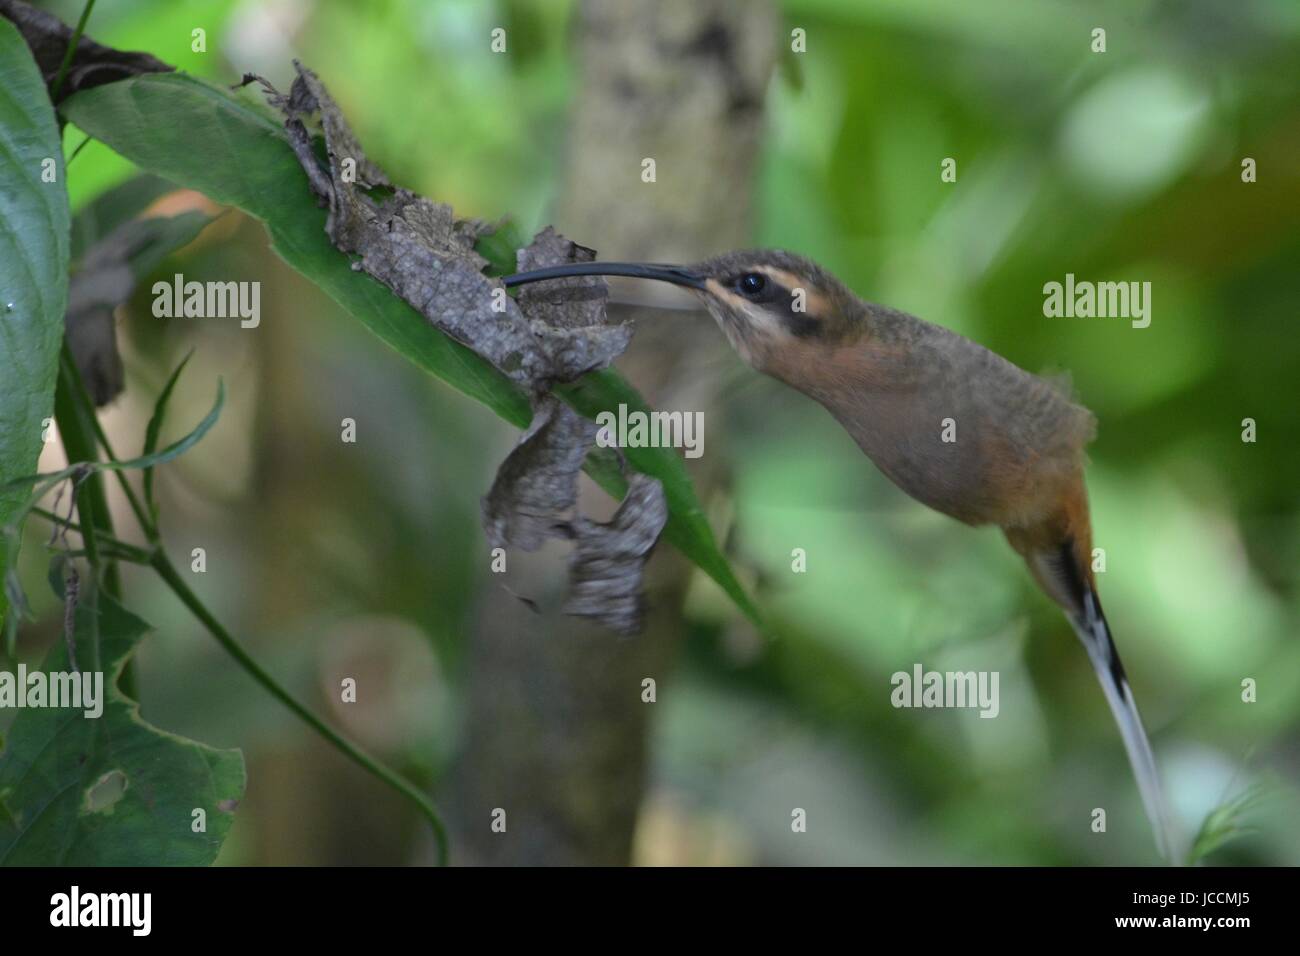 Un Colibrì si nutre di nettare da piante in una foresta tropicale. Iguassu, Brasile. Foto Stock